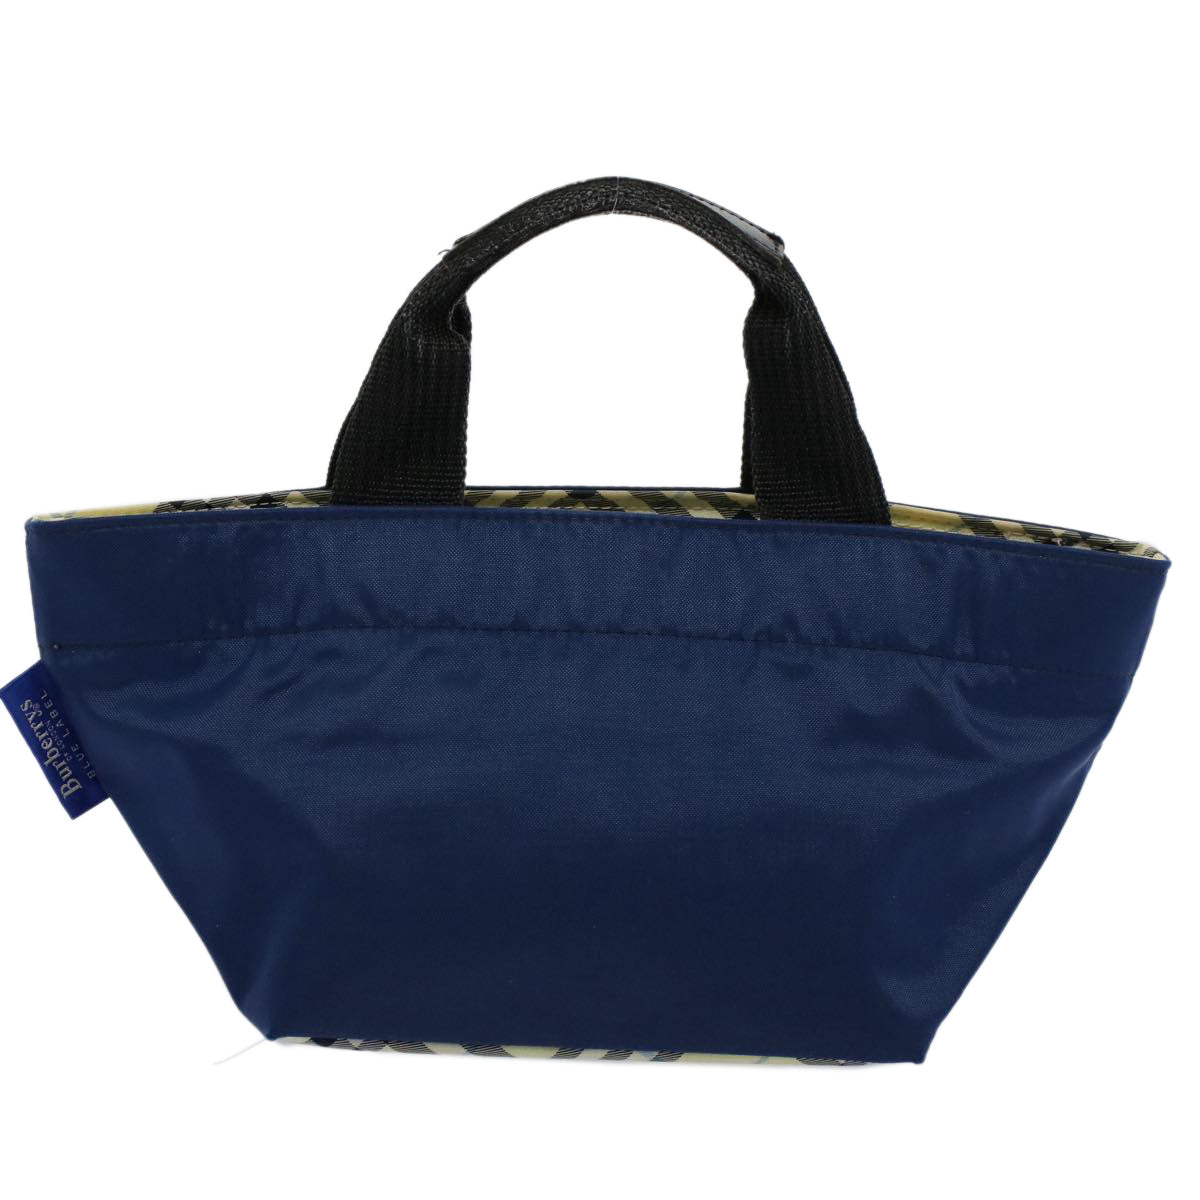 Burberrys Blue Label Tote Bag Nylon Navy Auth yb434 - 0